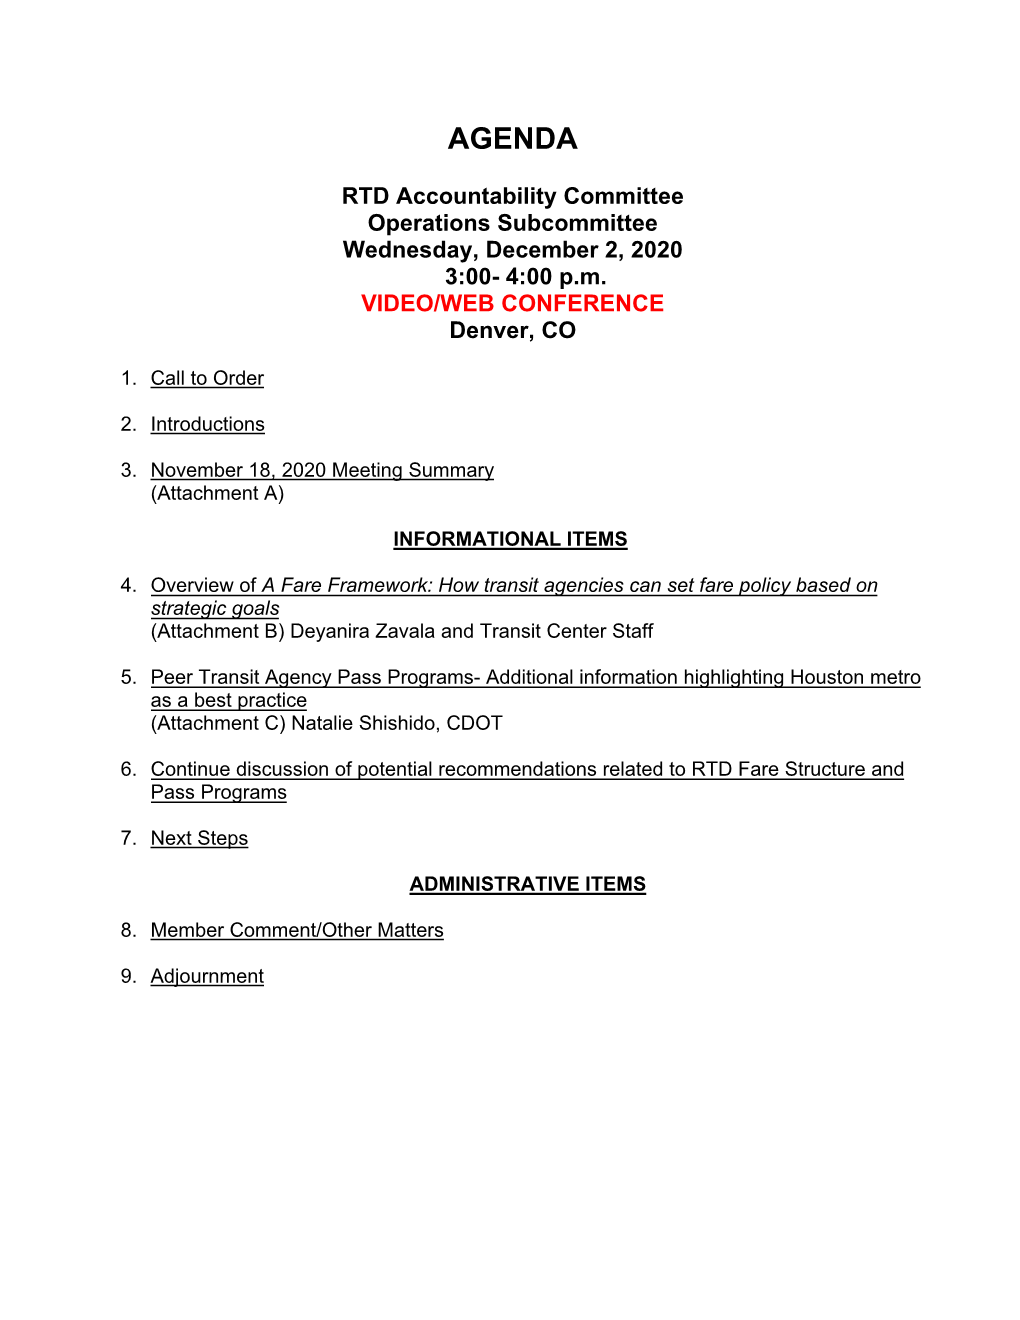 RTD Ops Sub Agenda 12-2-20.Pdf